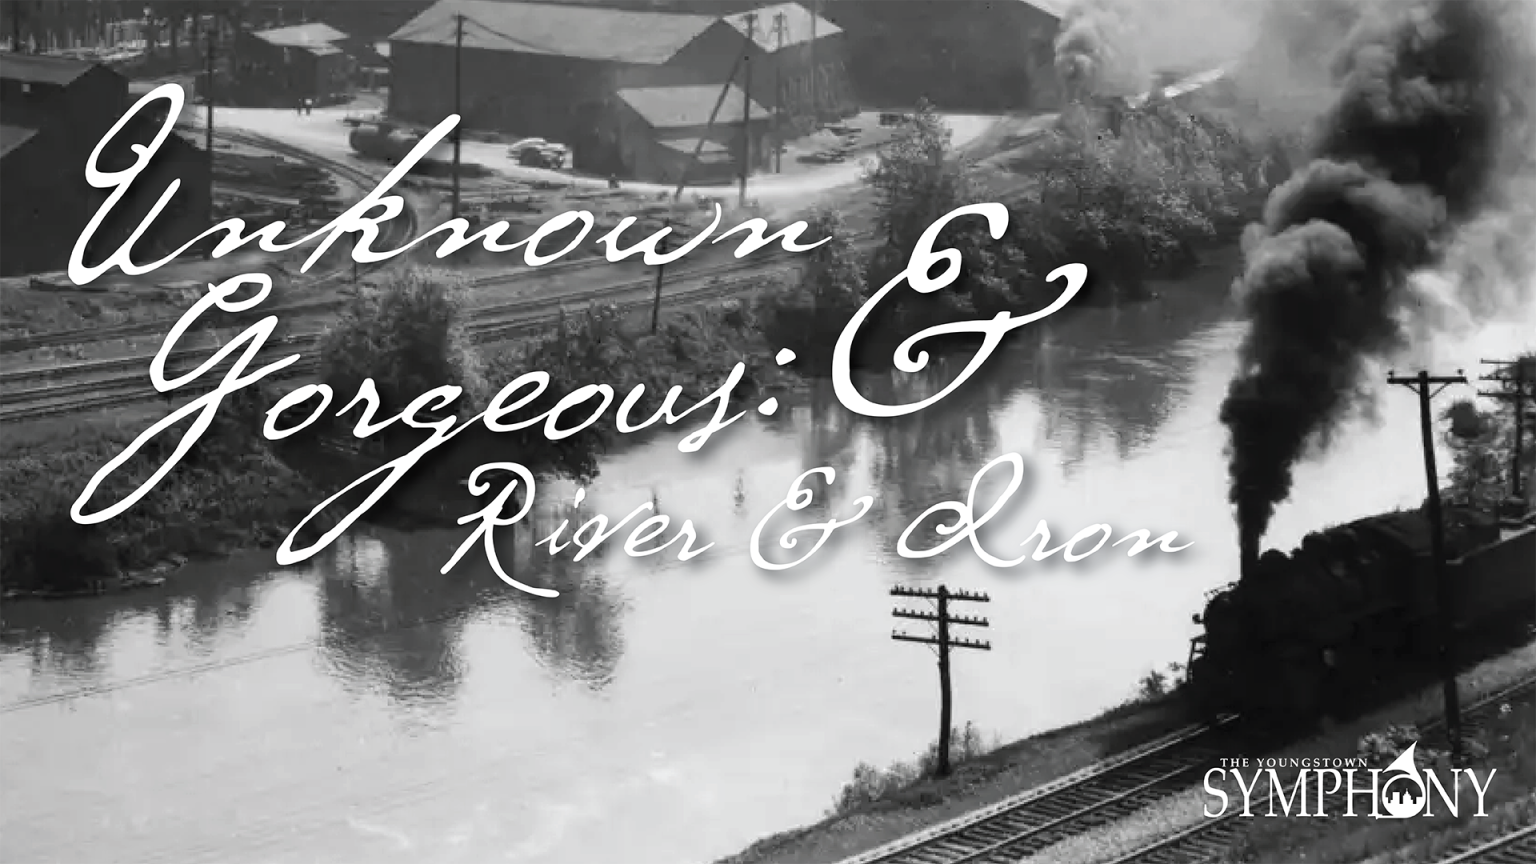 Image Unknown & Gorgeous: River & Iron